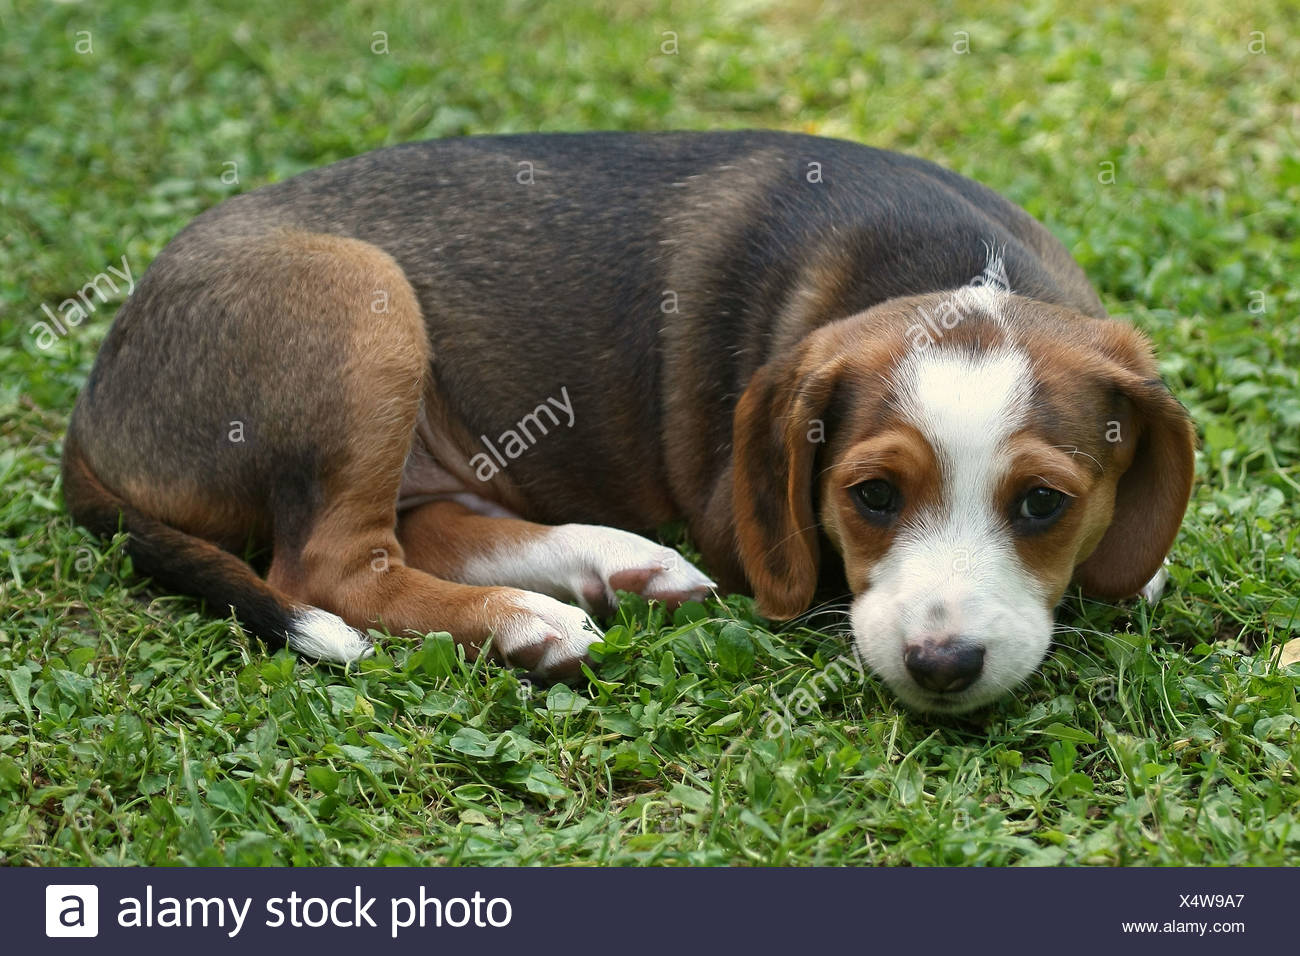 Braque Saint Germain Puppy Stock Photo Alamy